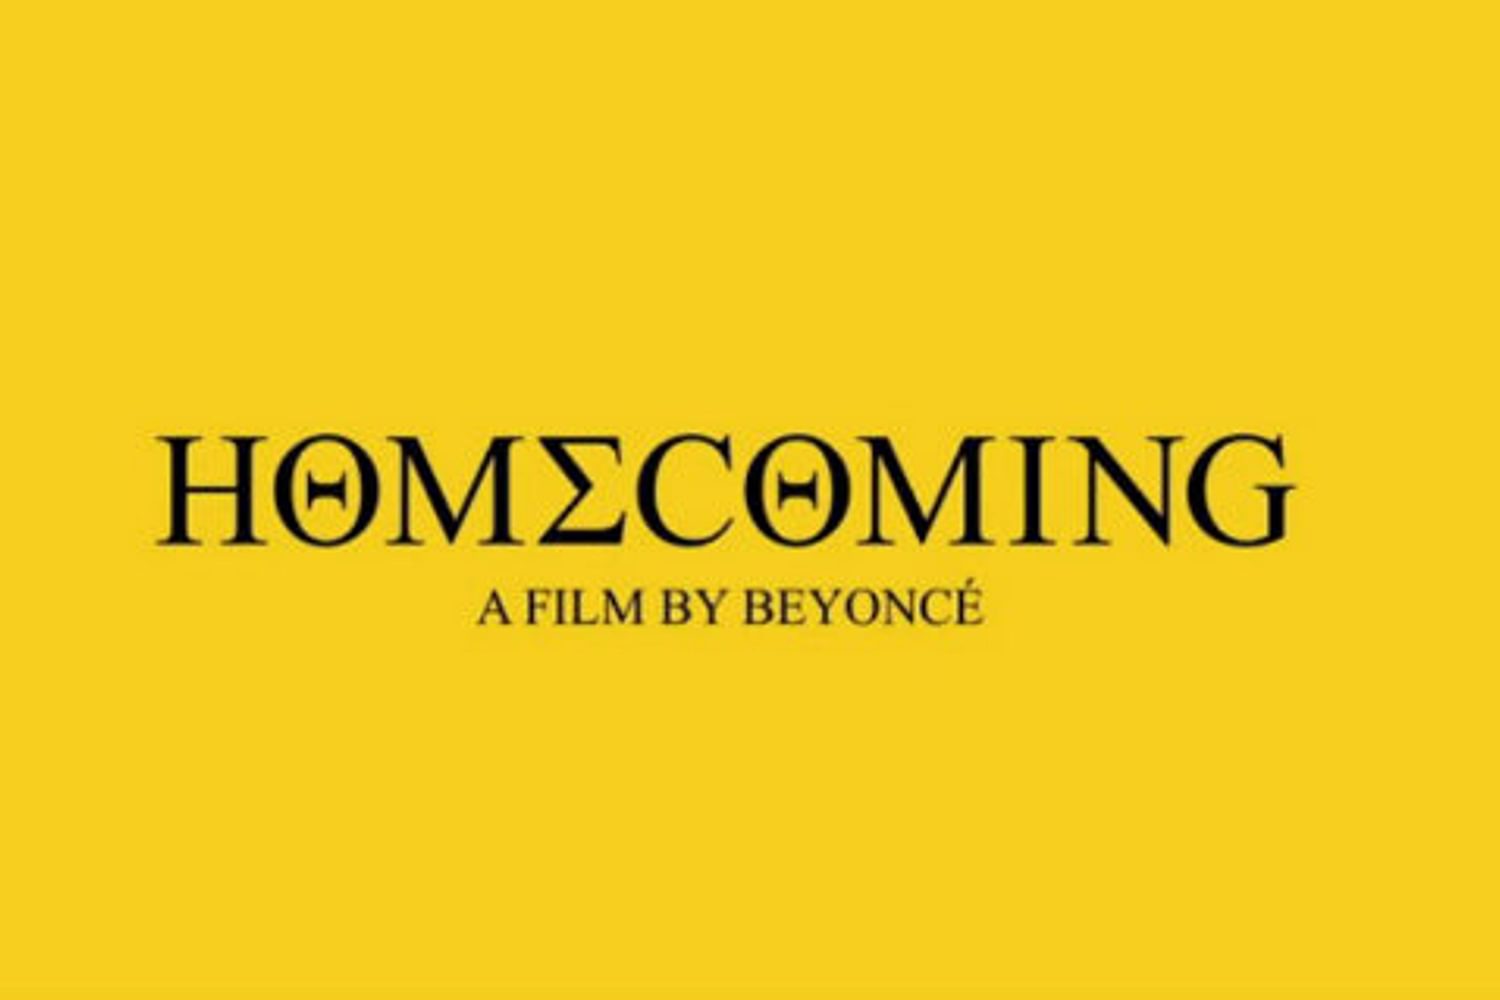 Beyoncé shares new live album and documentary ‘Homecoming’